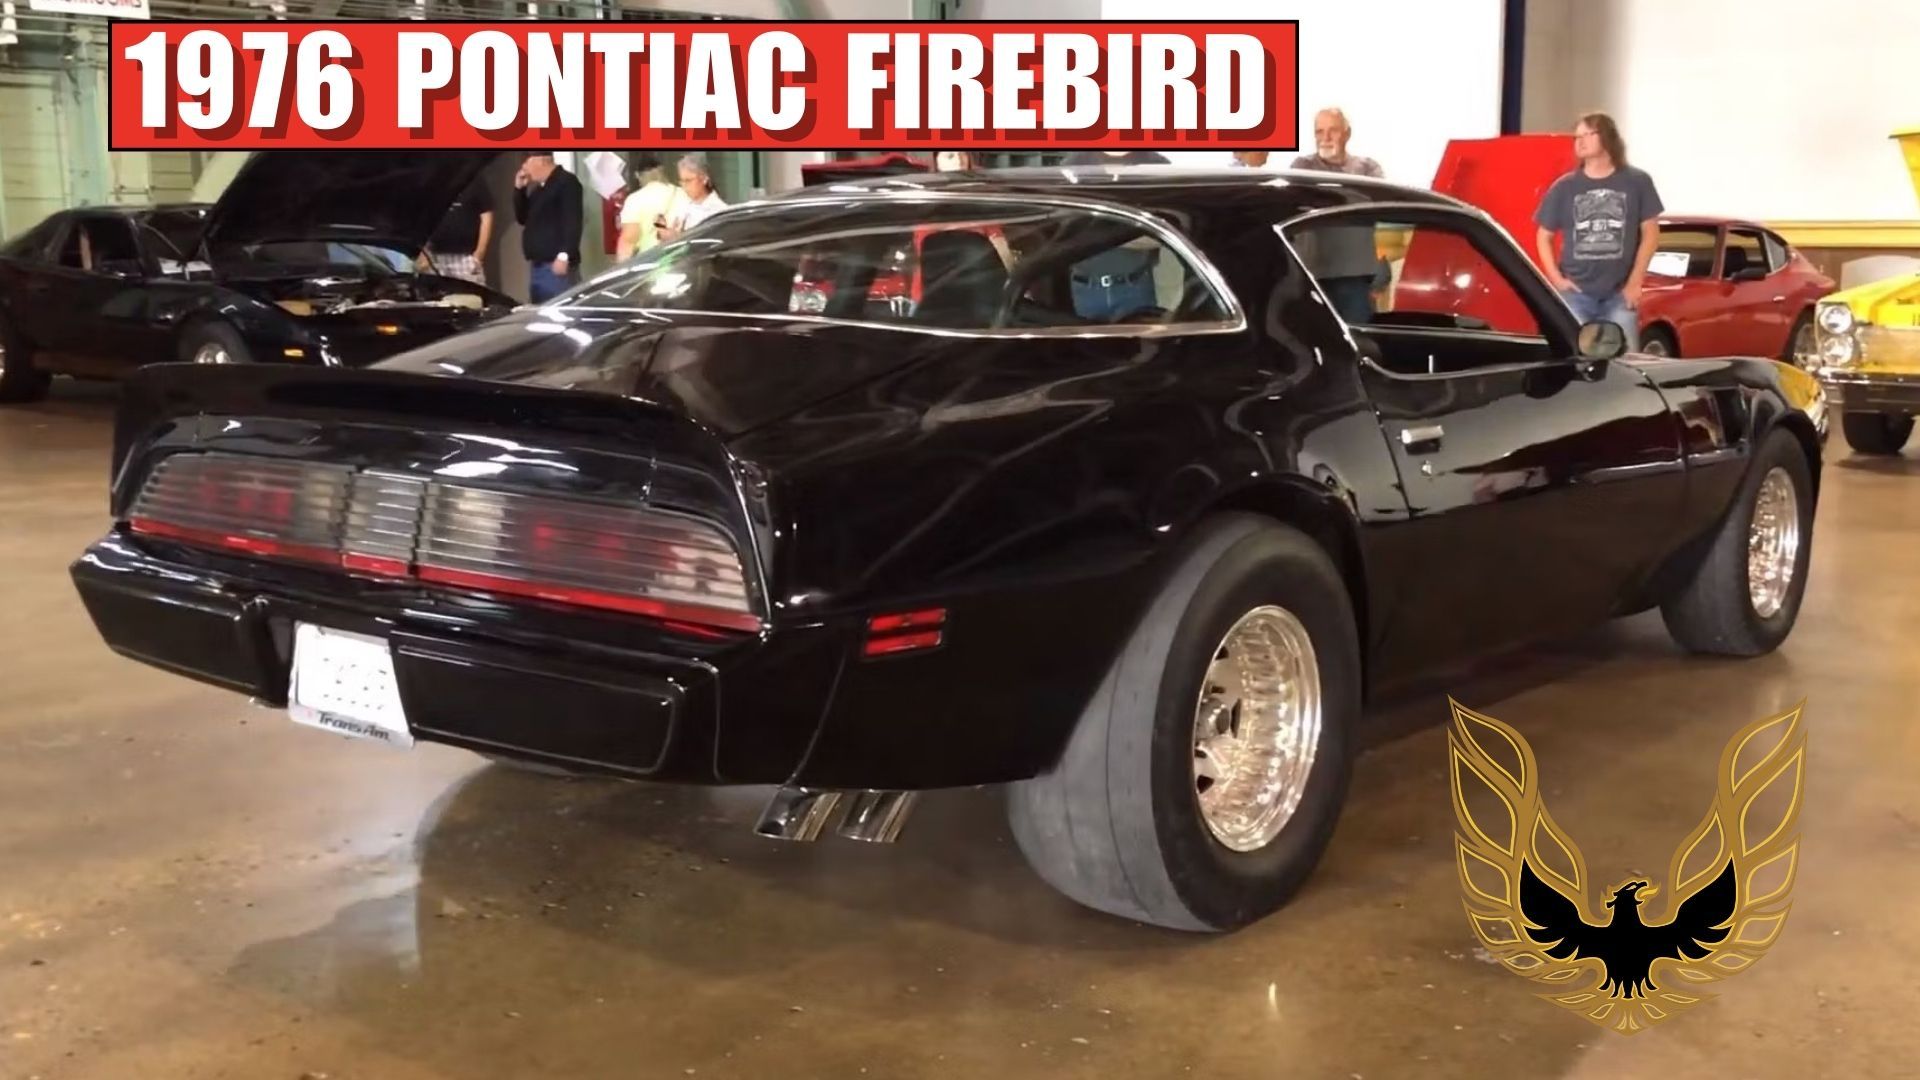 1976 Pontiac Firebird Rear